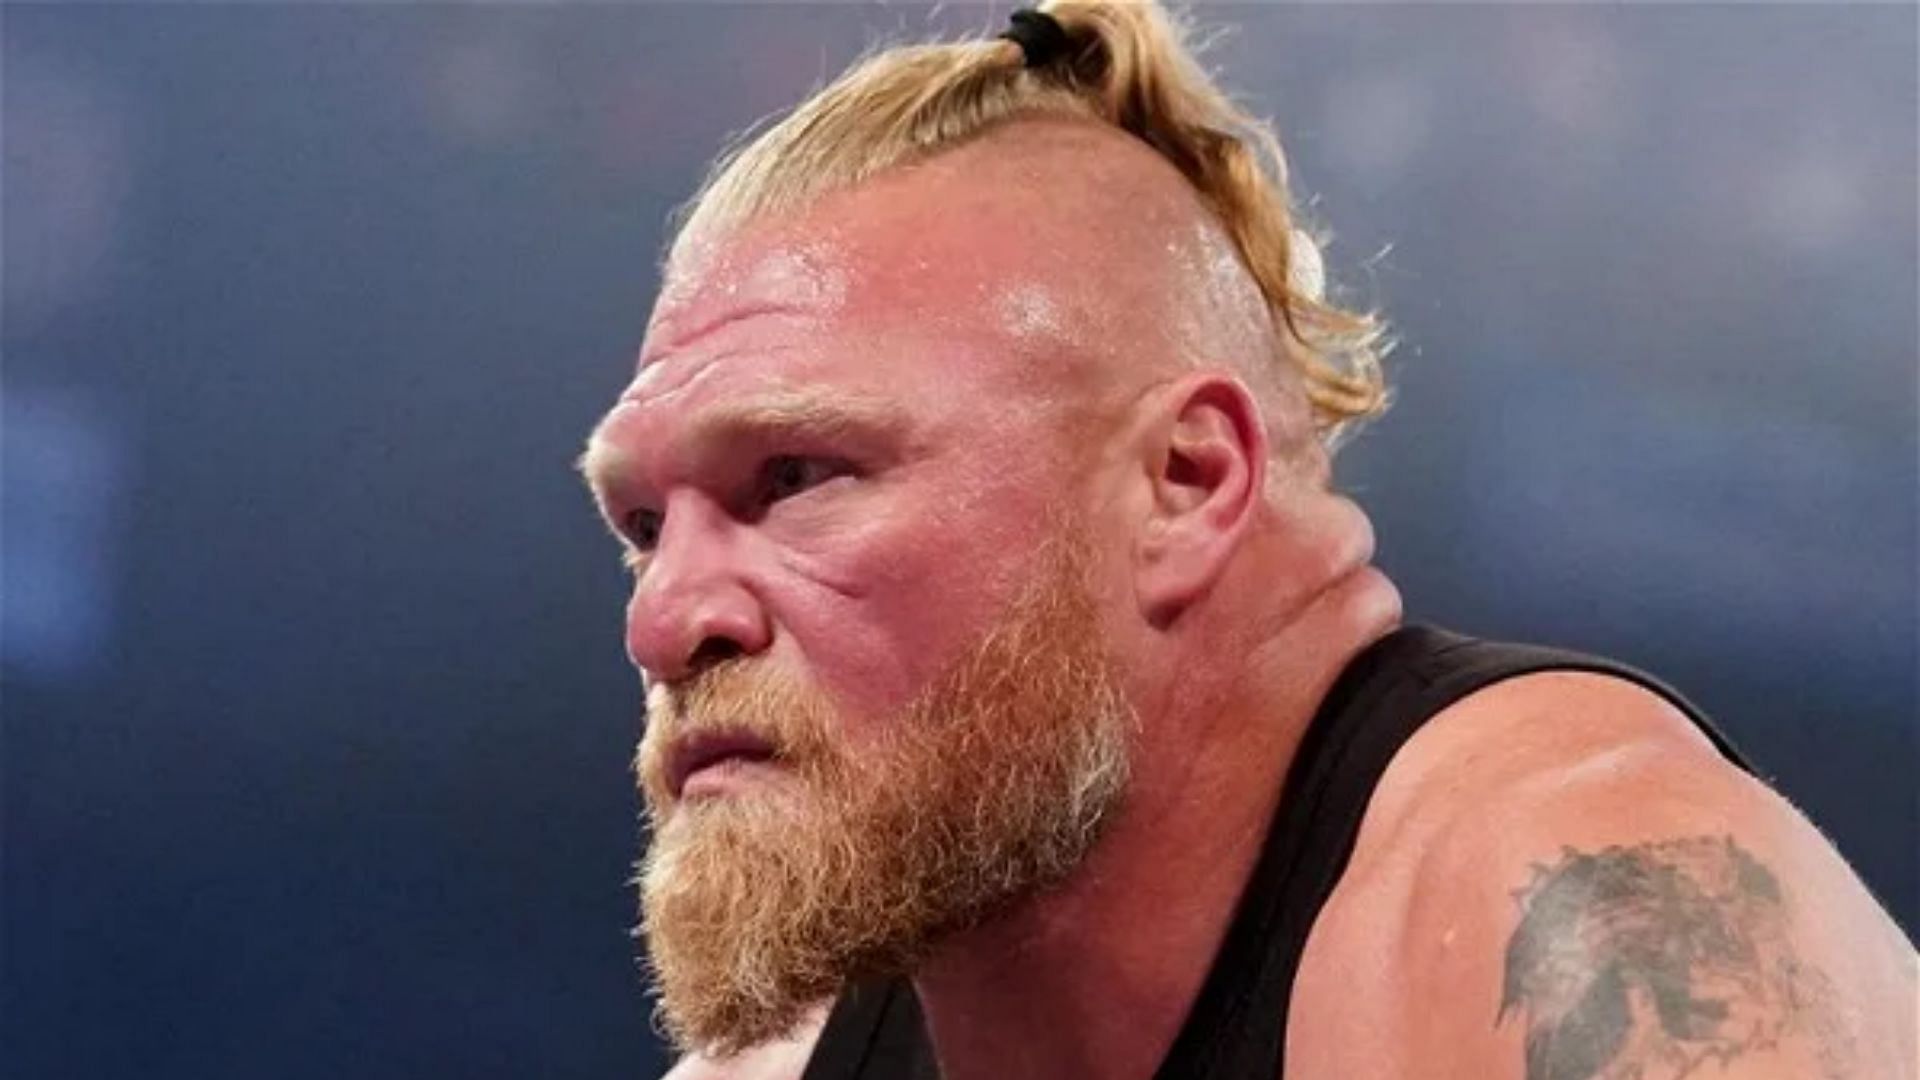 Brock Lesnar has had a long career in WWE